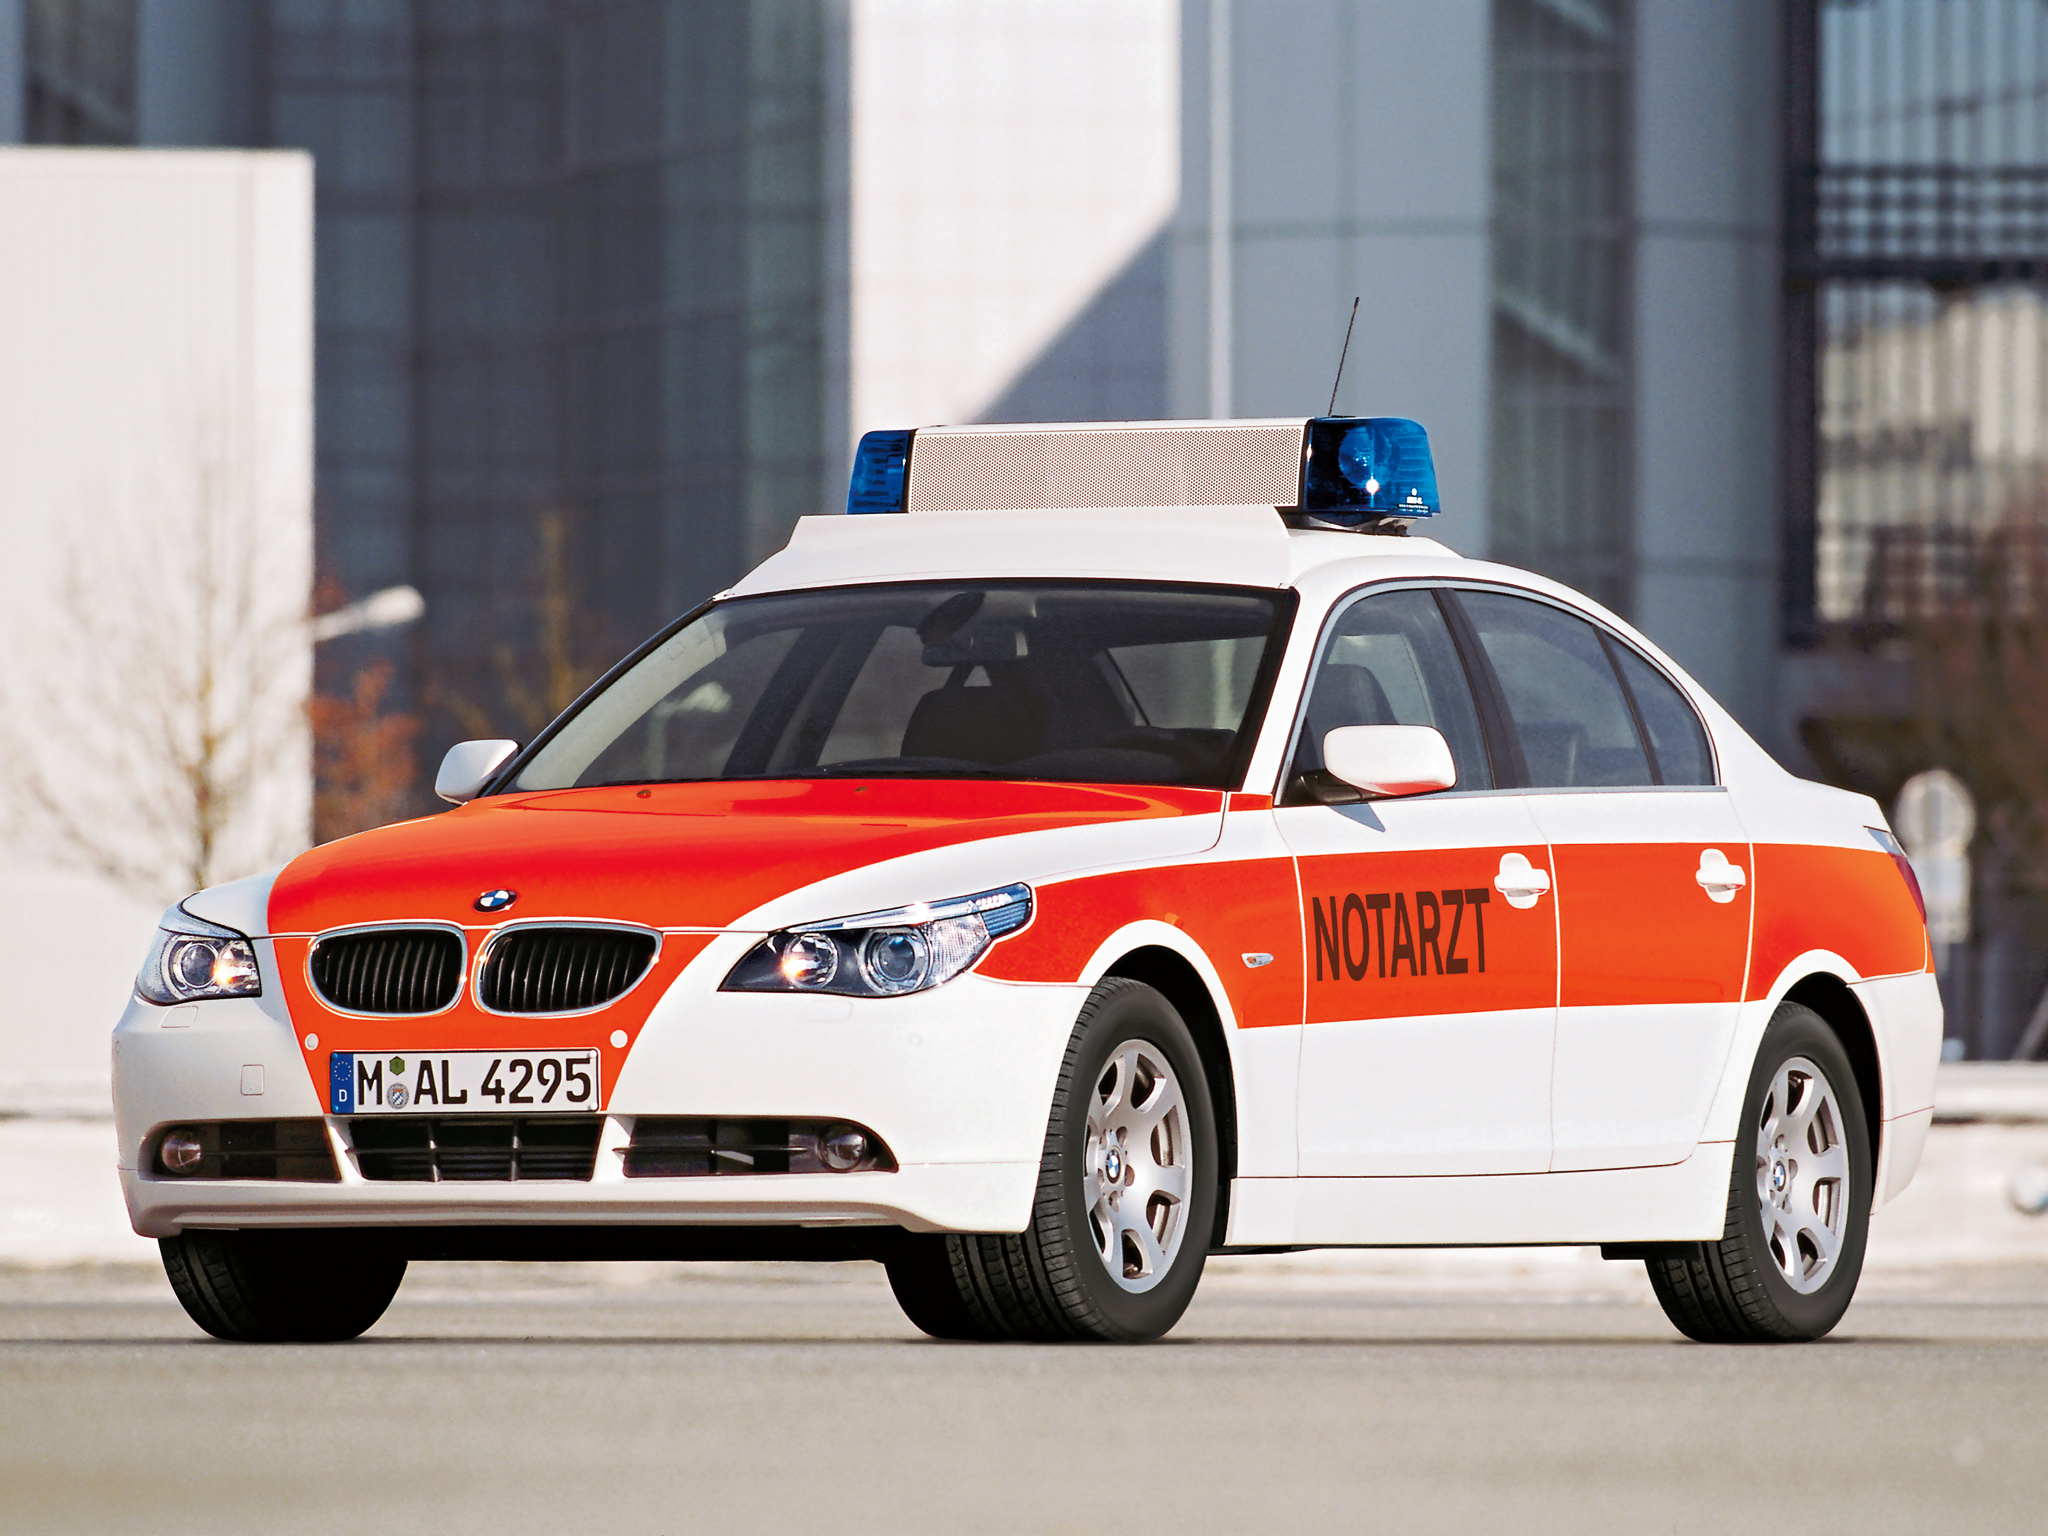 2003, Bmw, 5 series, Sedan, Notarzt, E60, Emergency, Ambulance Wallpaper